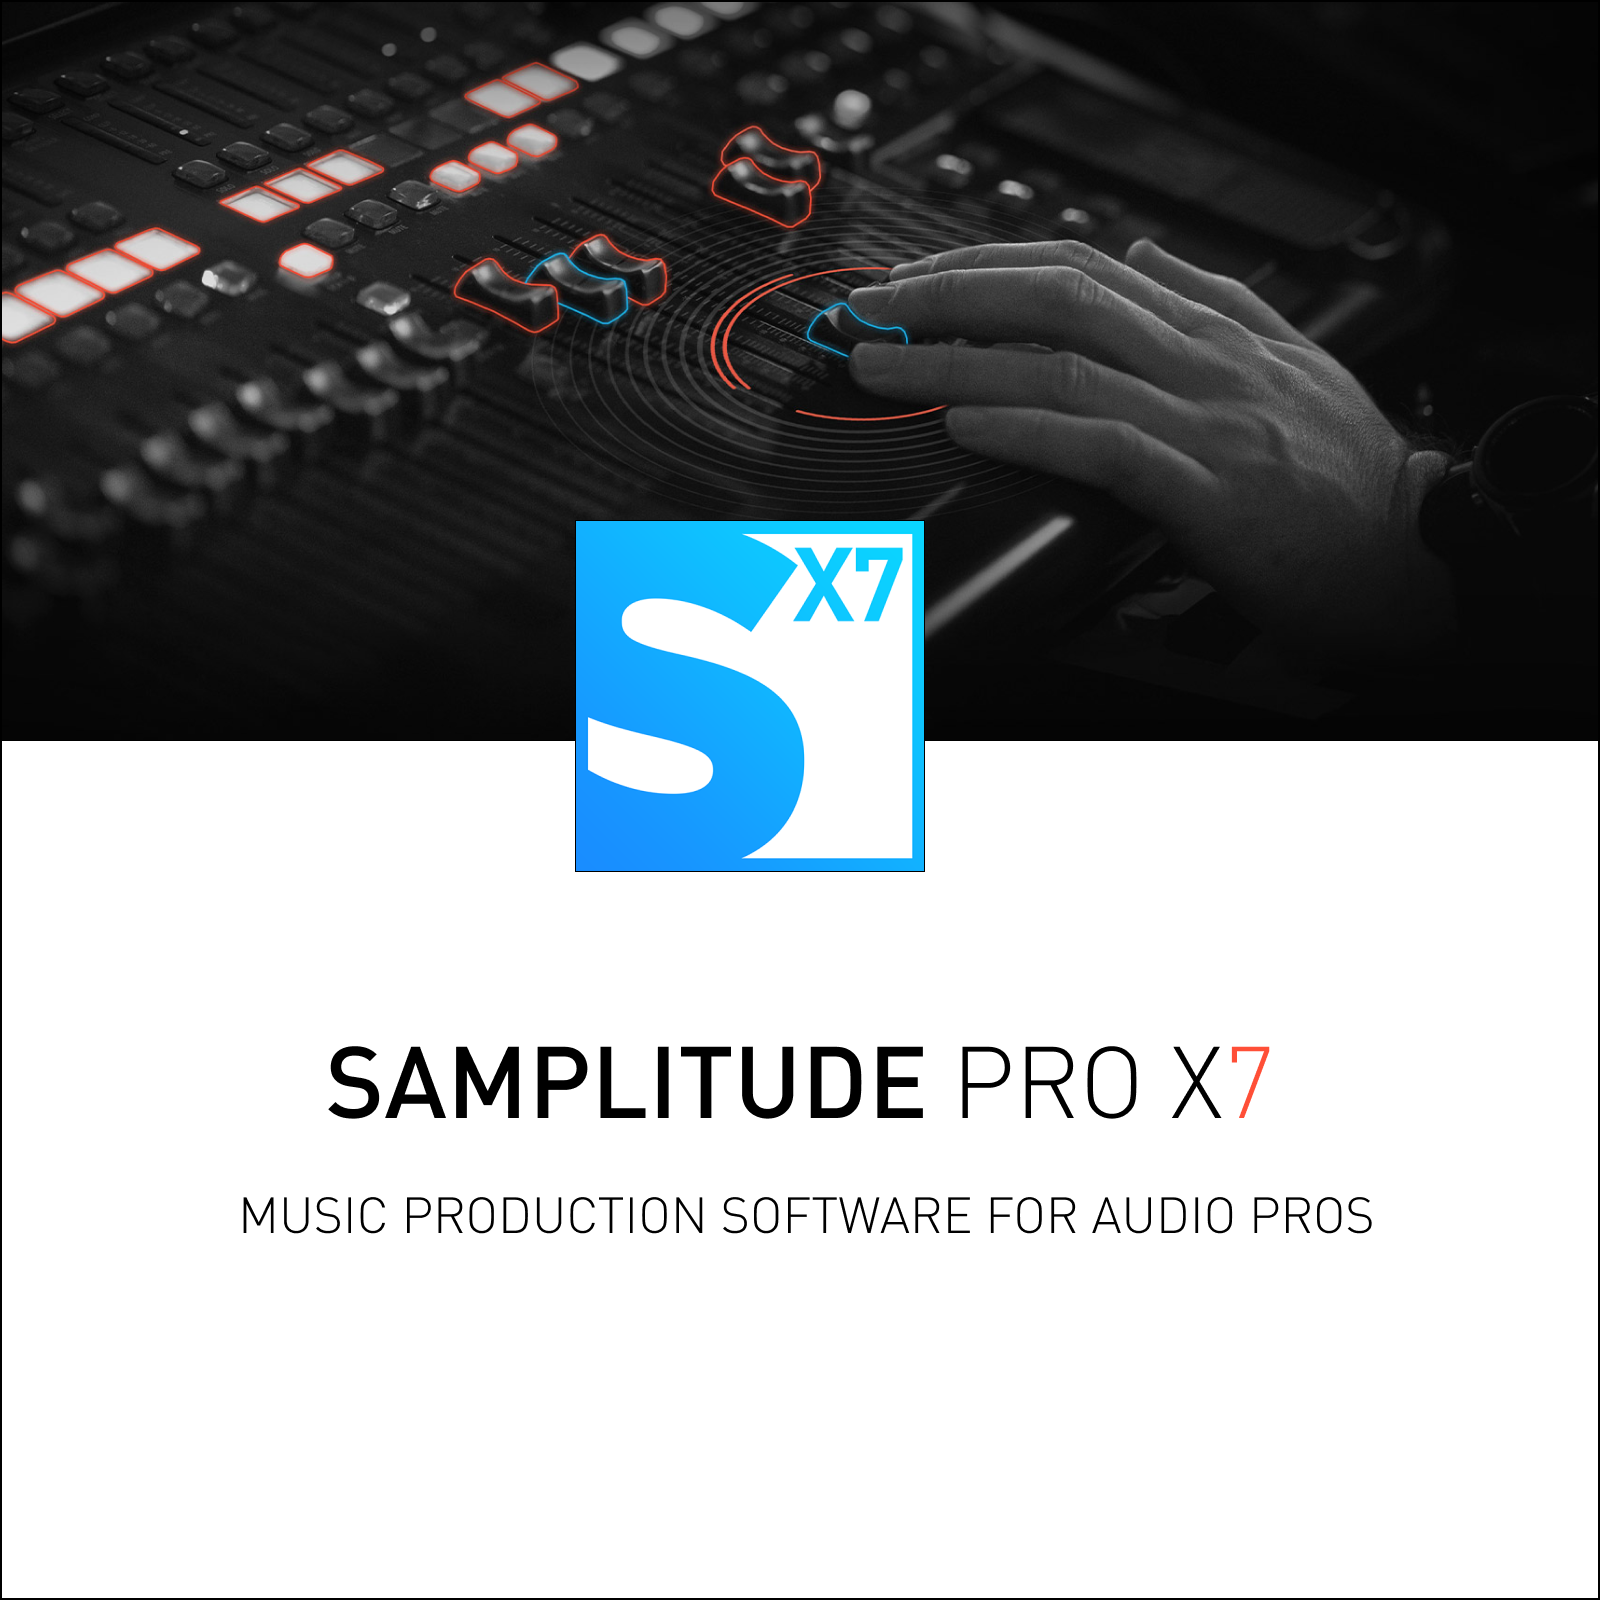 Samplitude Pro X7